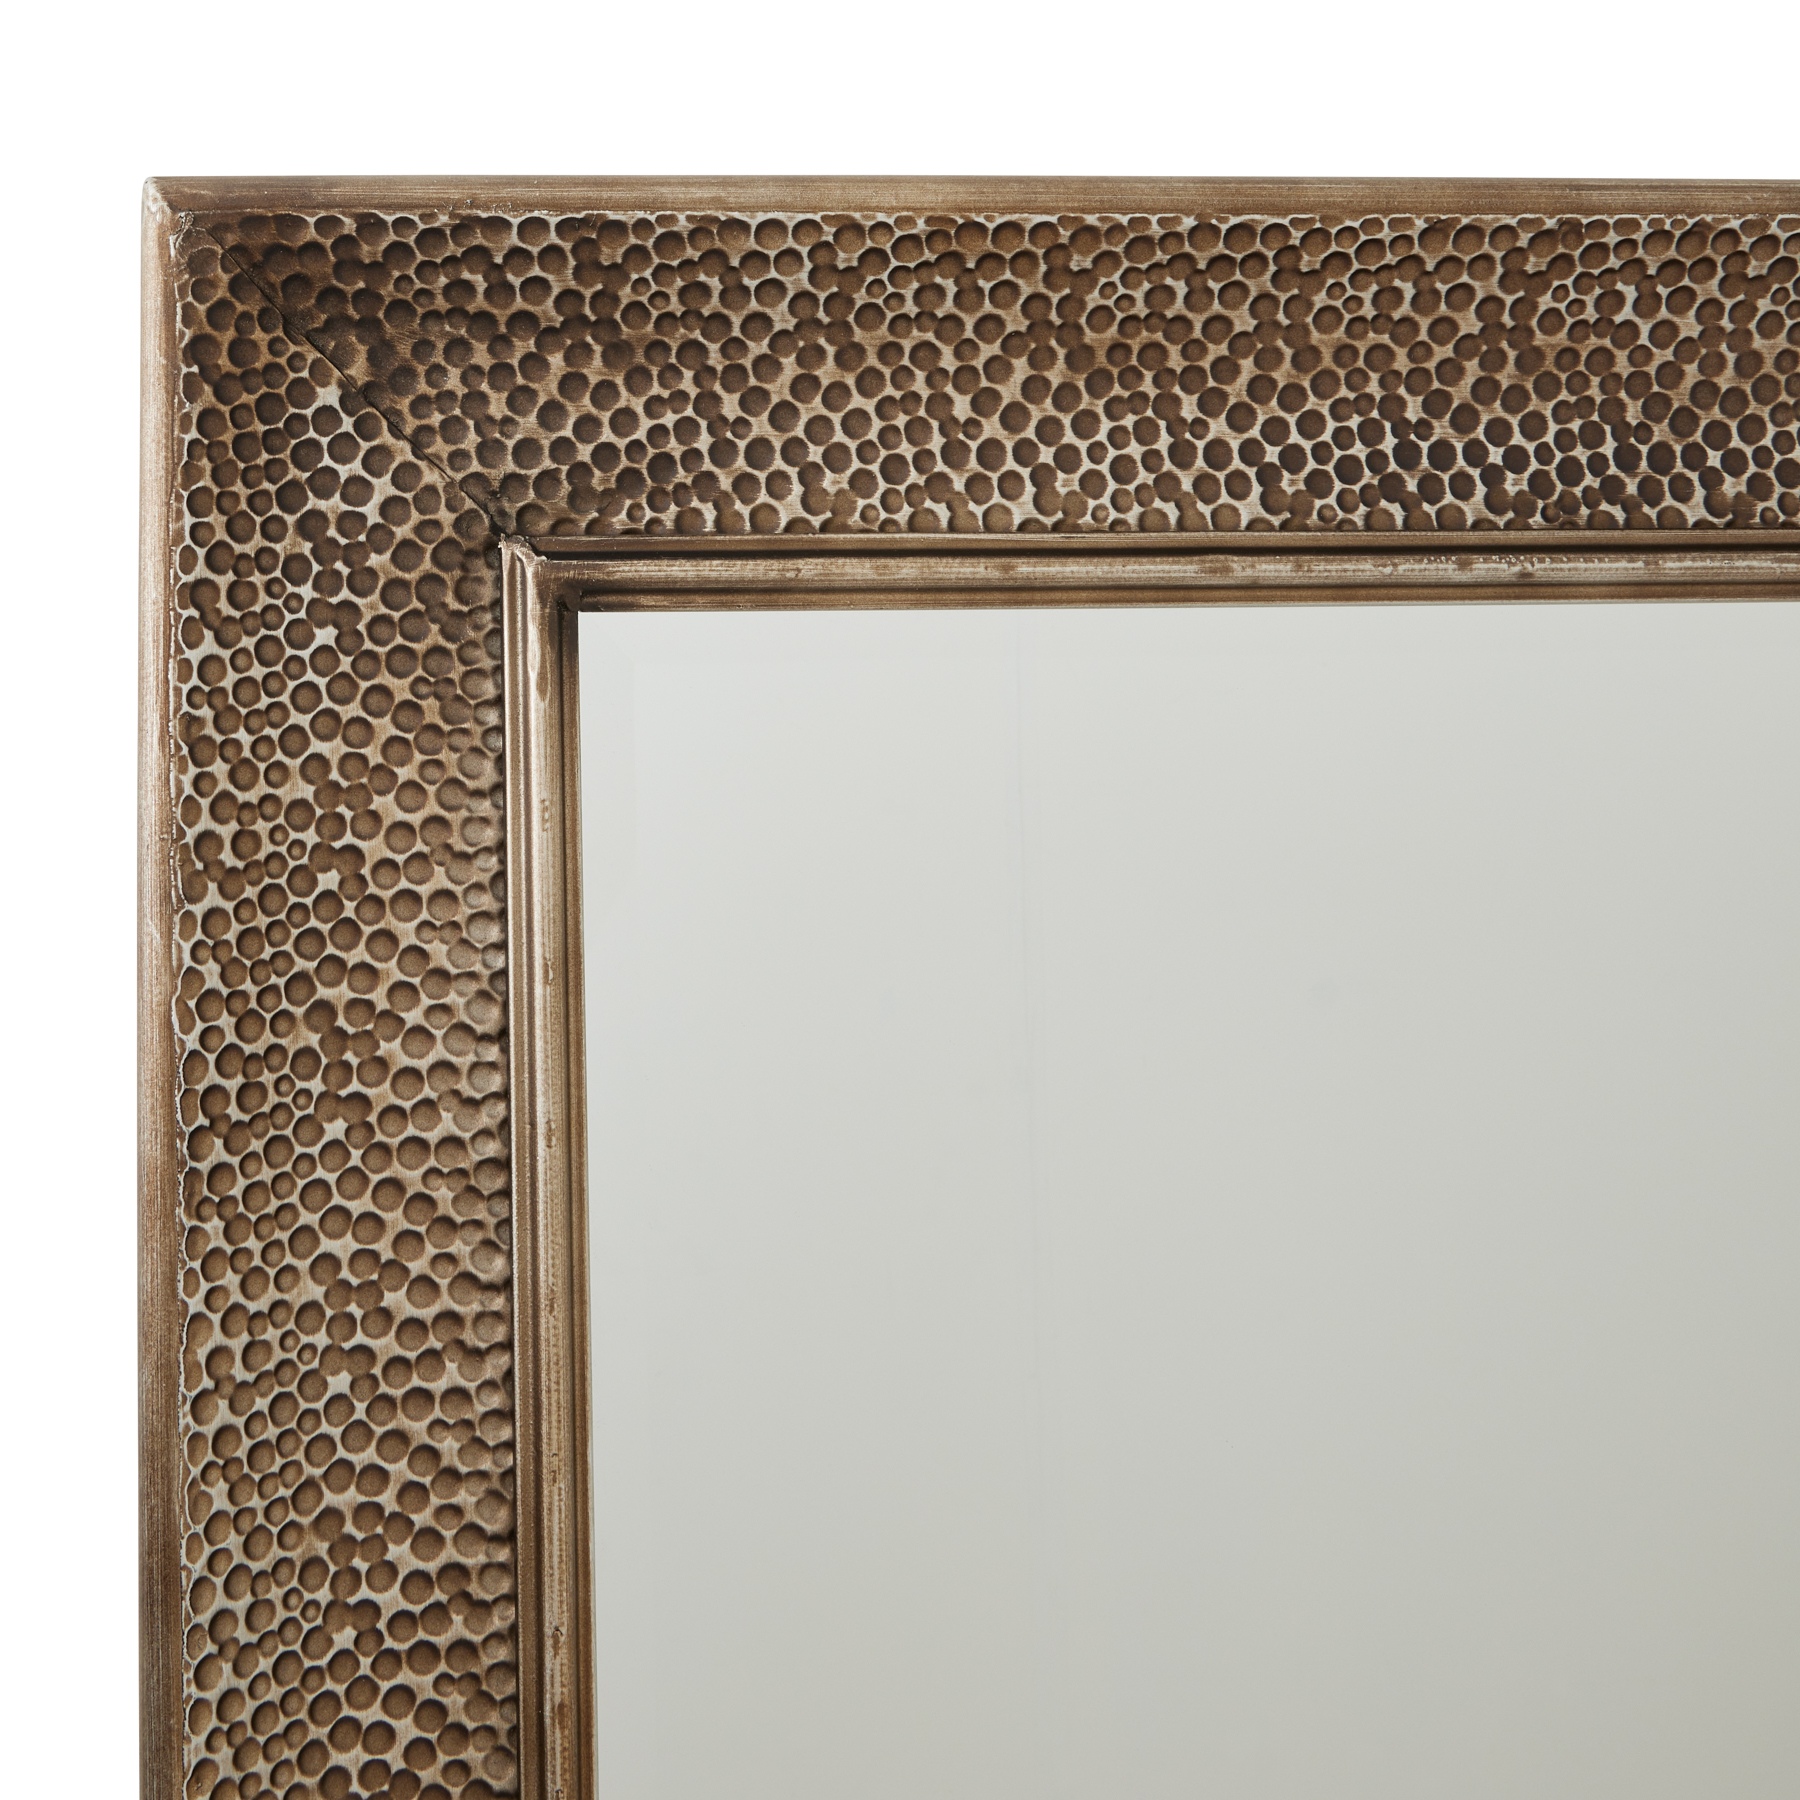 Hammered Large Rectangular Brass Wall Mirror - Image 2